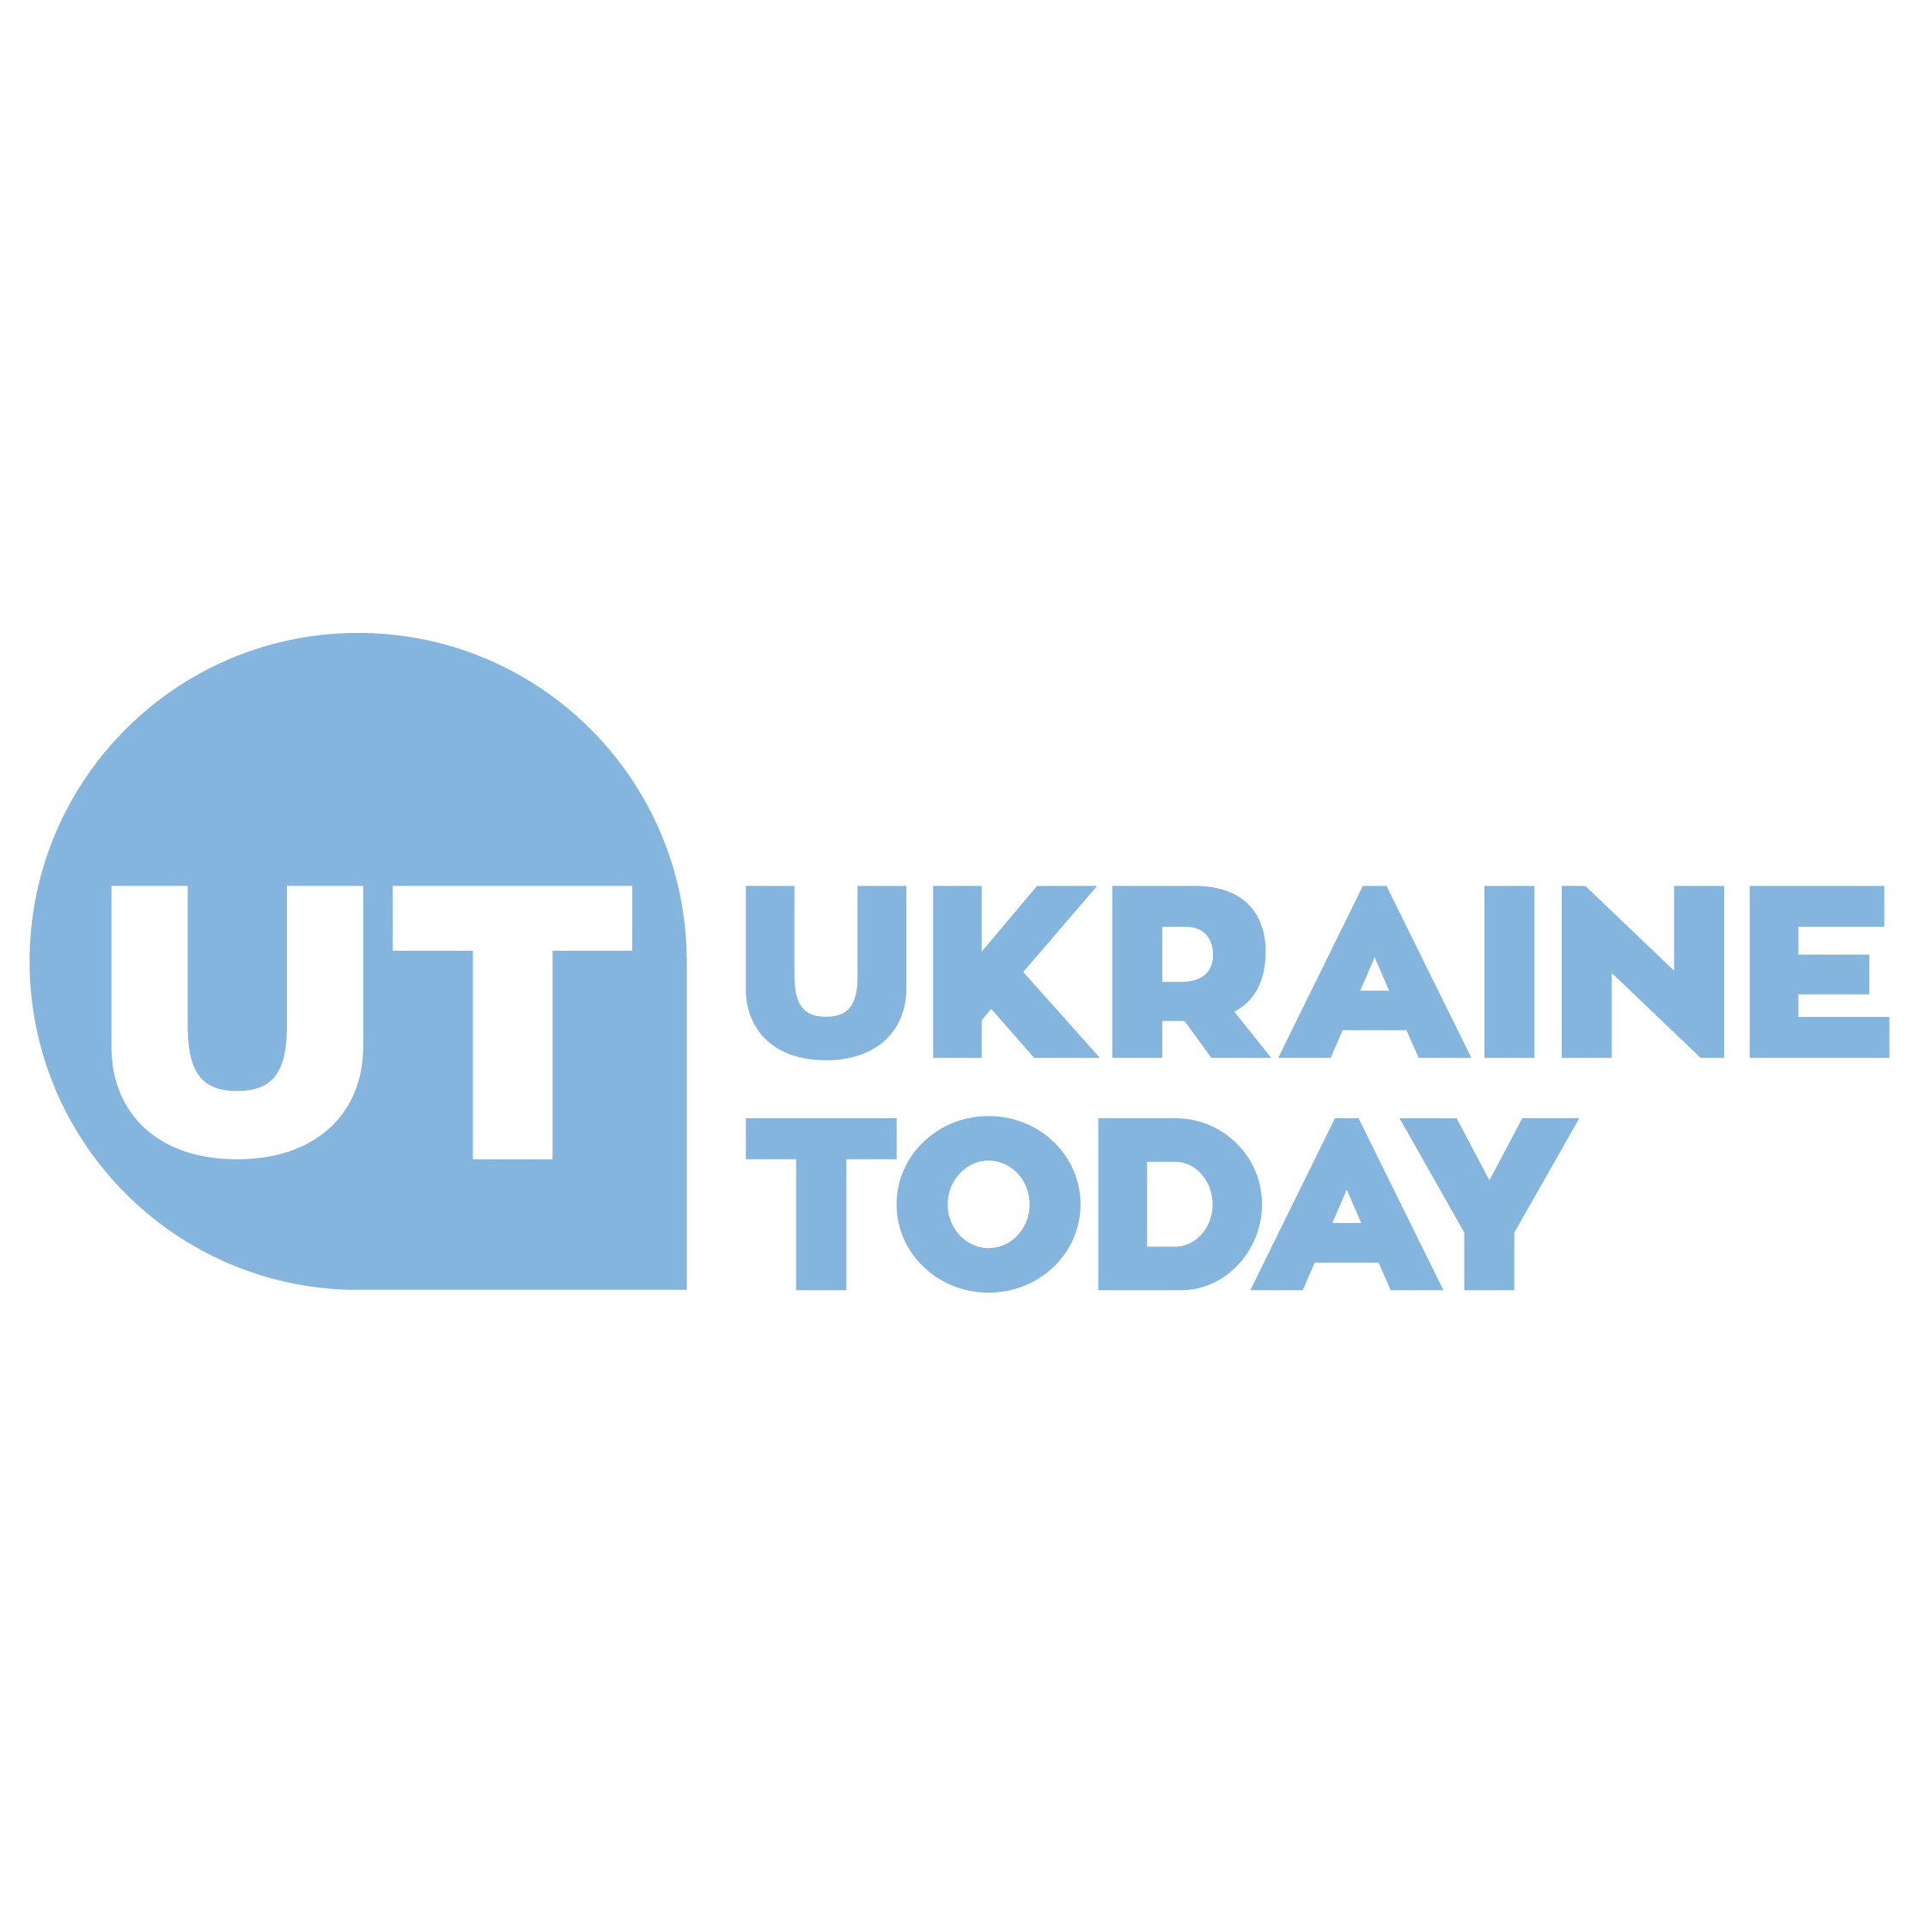 Сайт каналу Ukraine Today зазнає DDoS-атаки